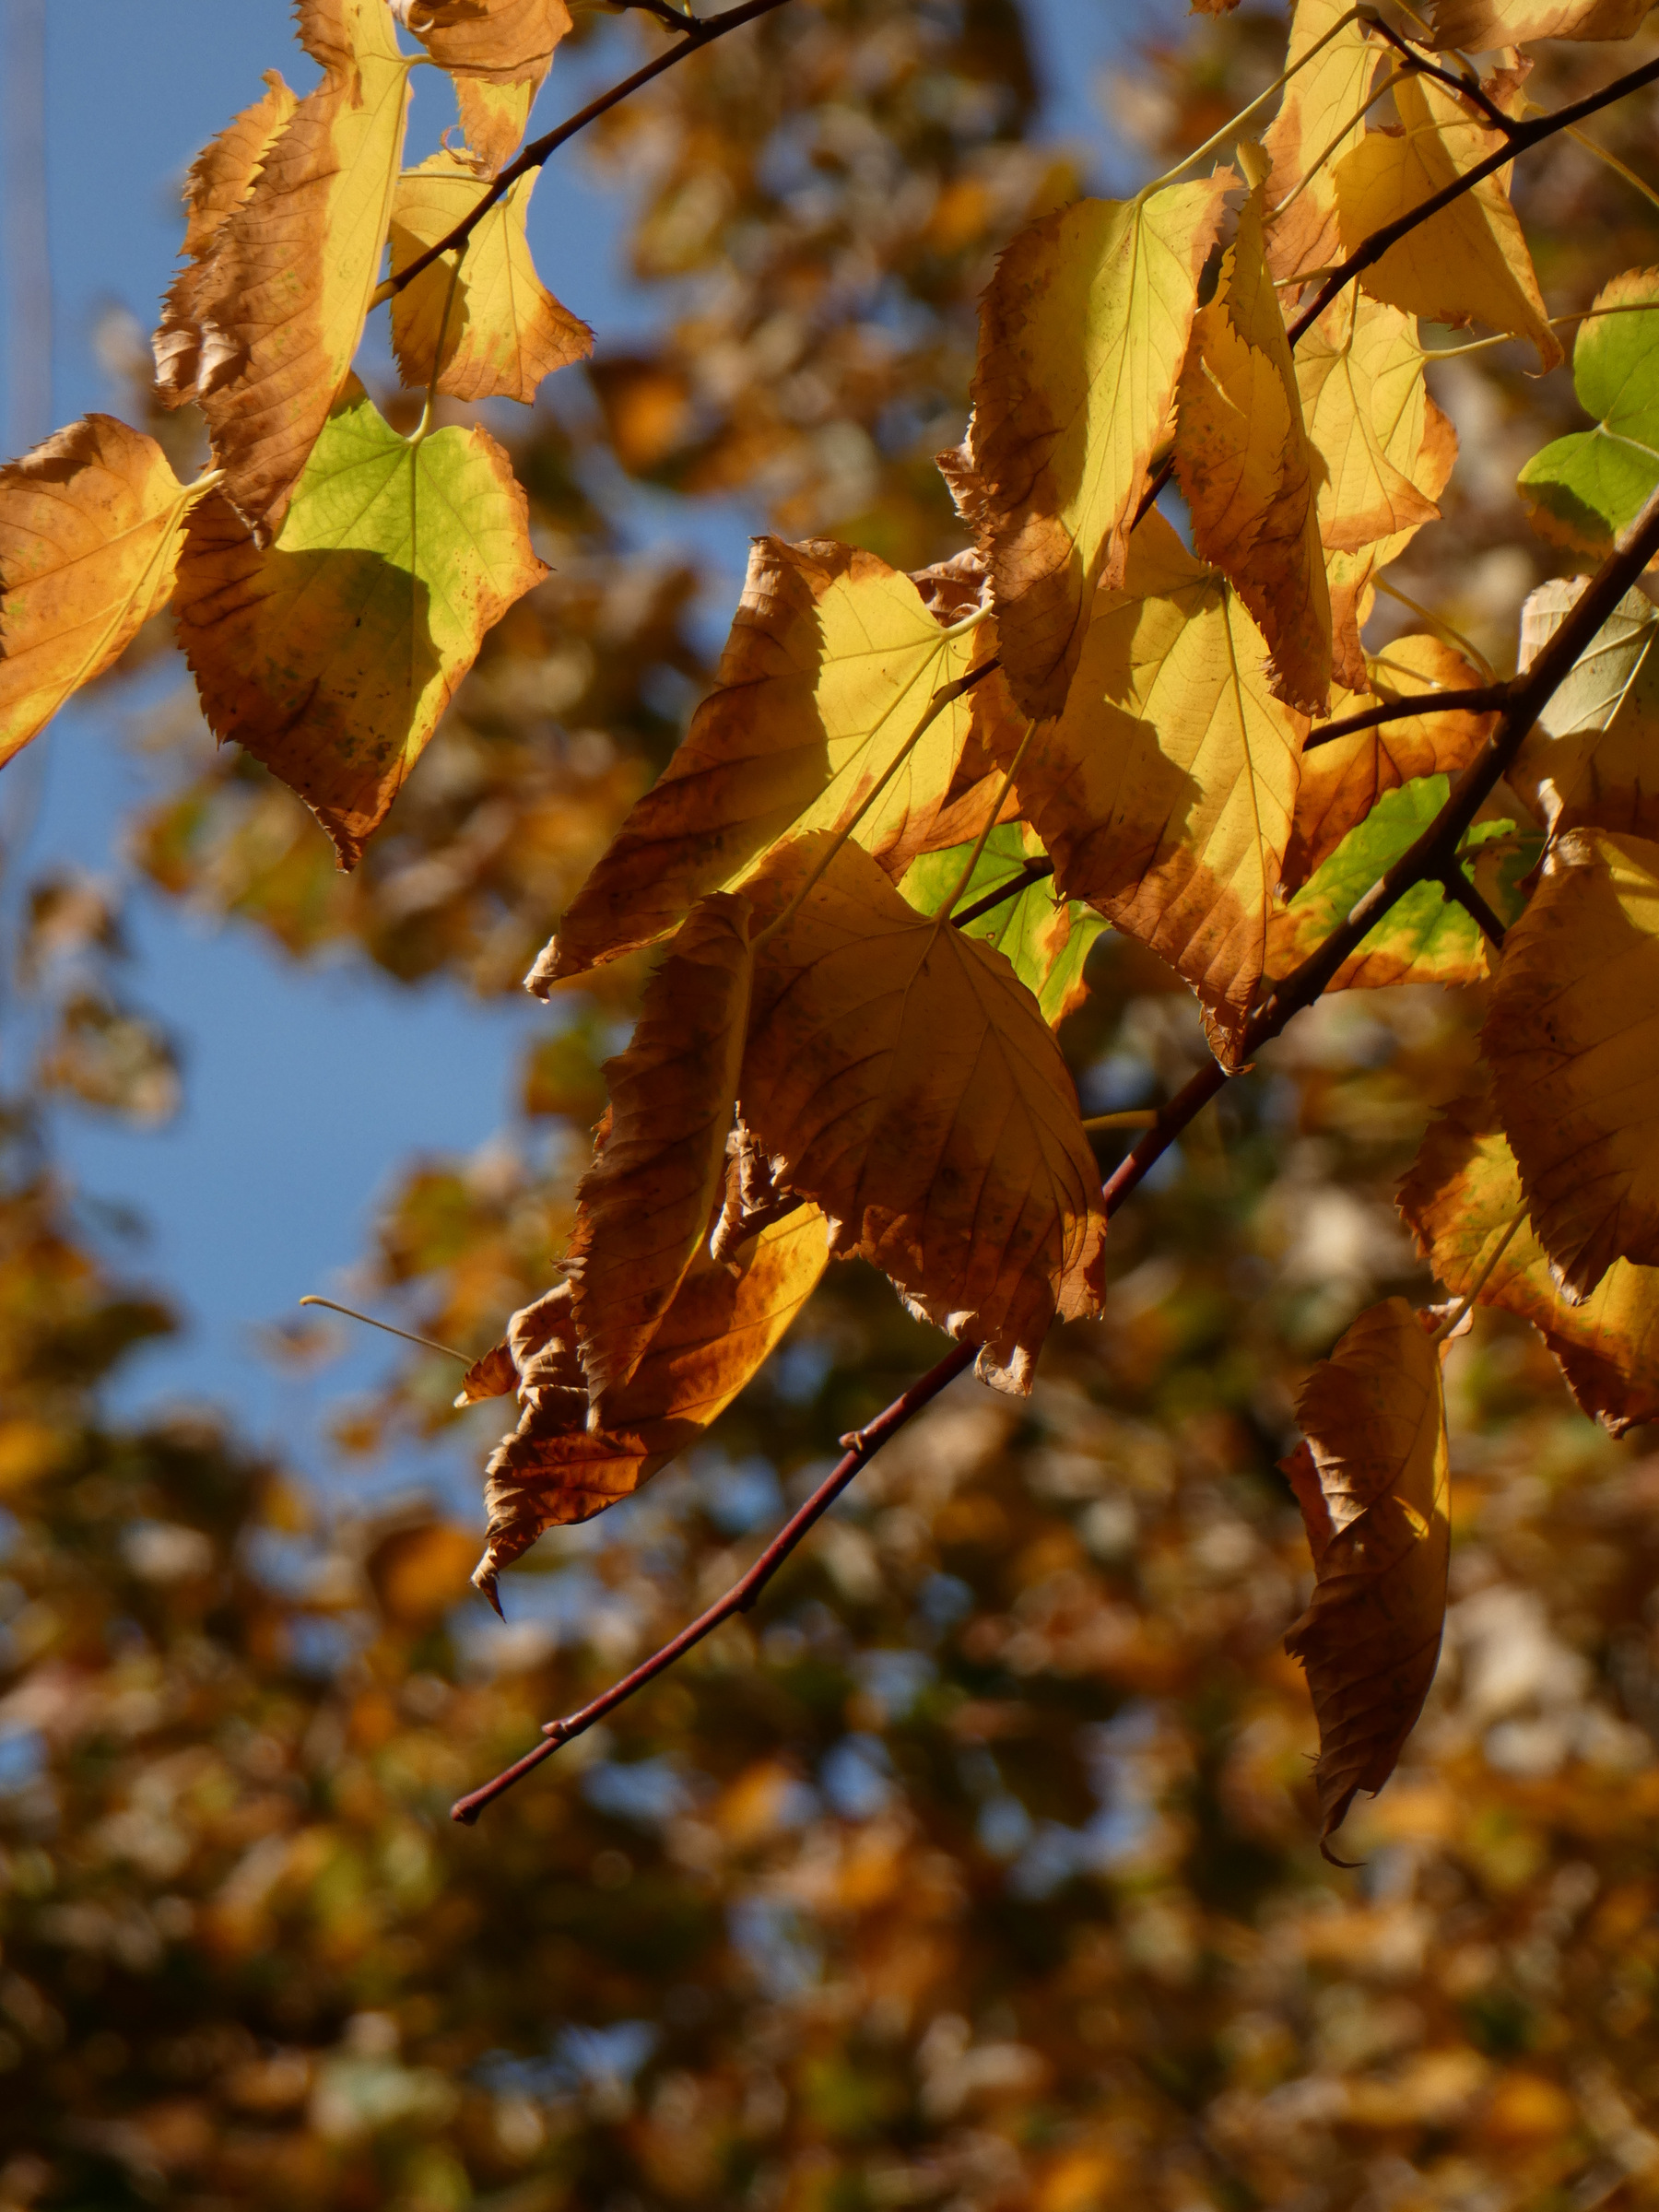 Golden leaves against a blue sky